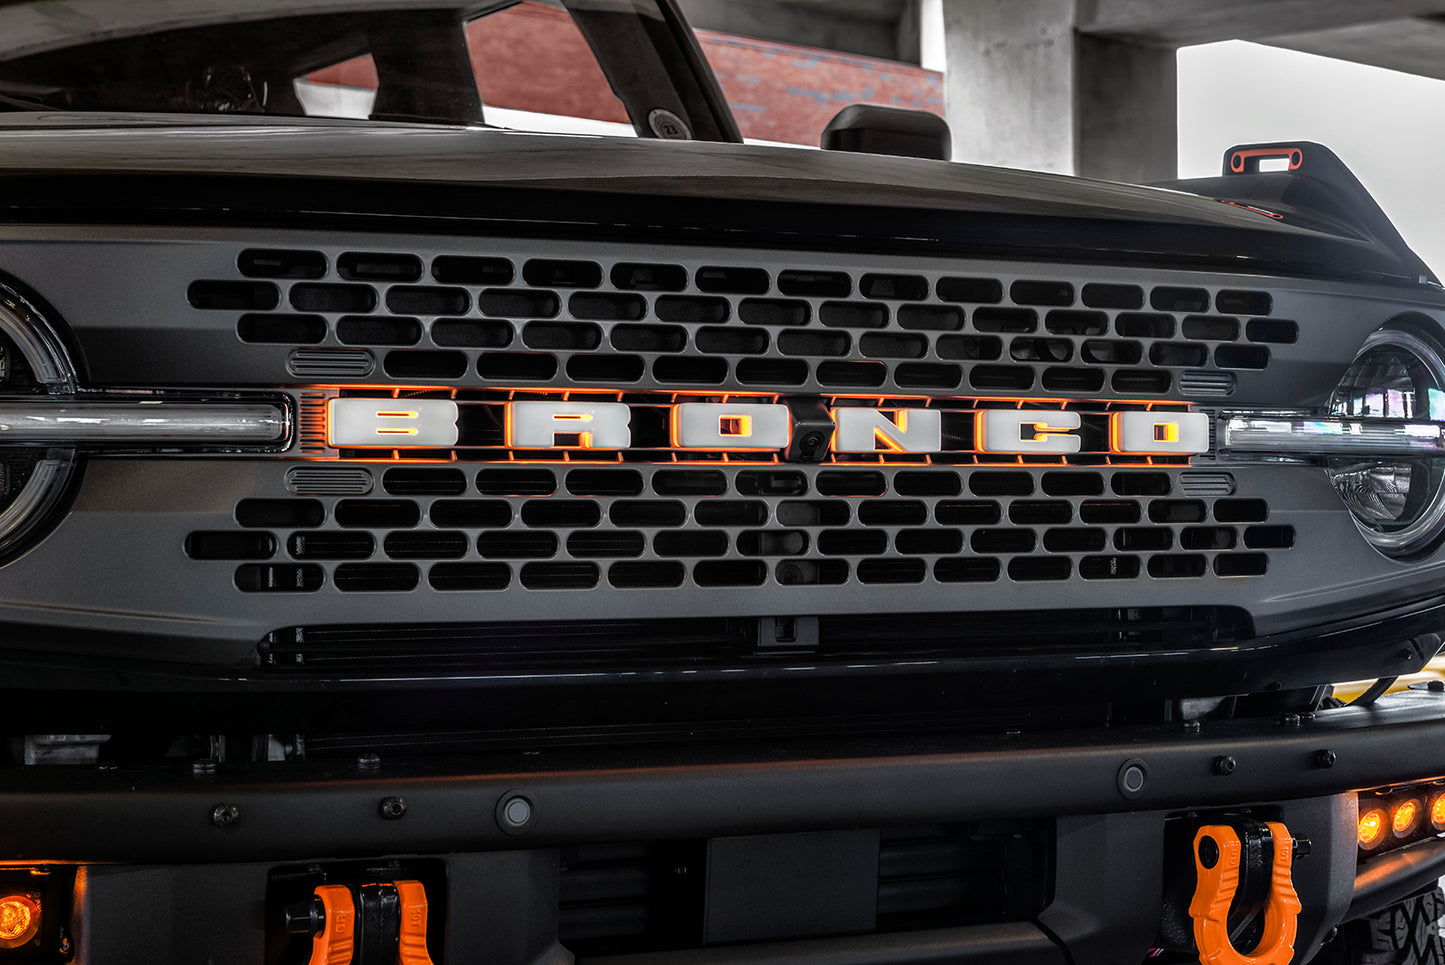 ORACLE Lighting 3140-G-005 Fits 2021-2023 Ford Bronco Universal Illuminated LED Letter Badges - Matte White Surface Finish - G